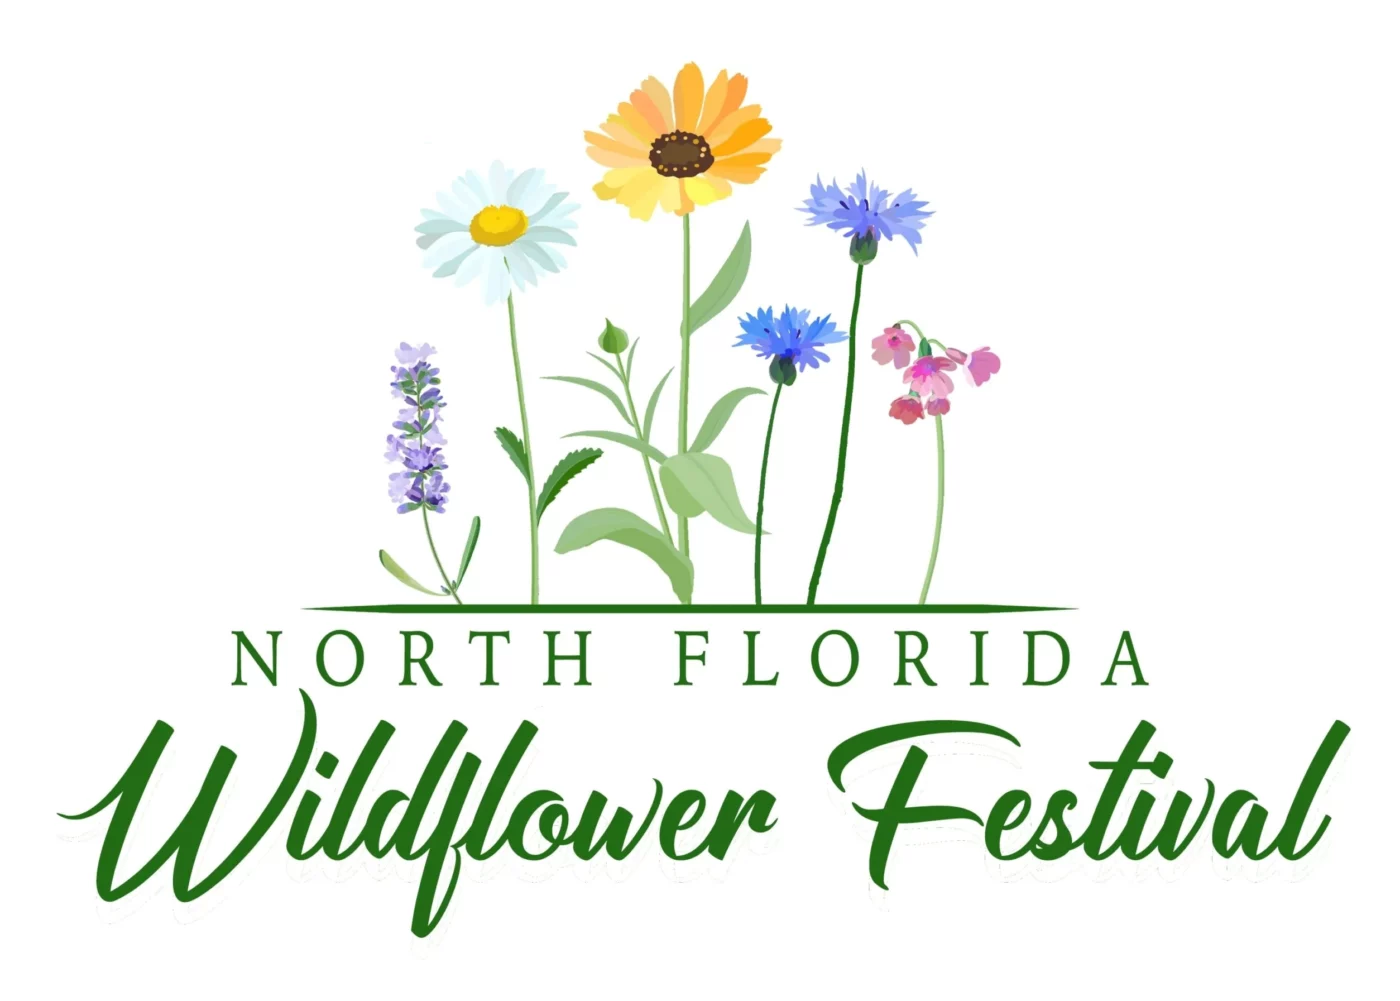 North Florida Wildflower Festival logo design